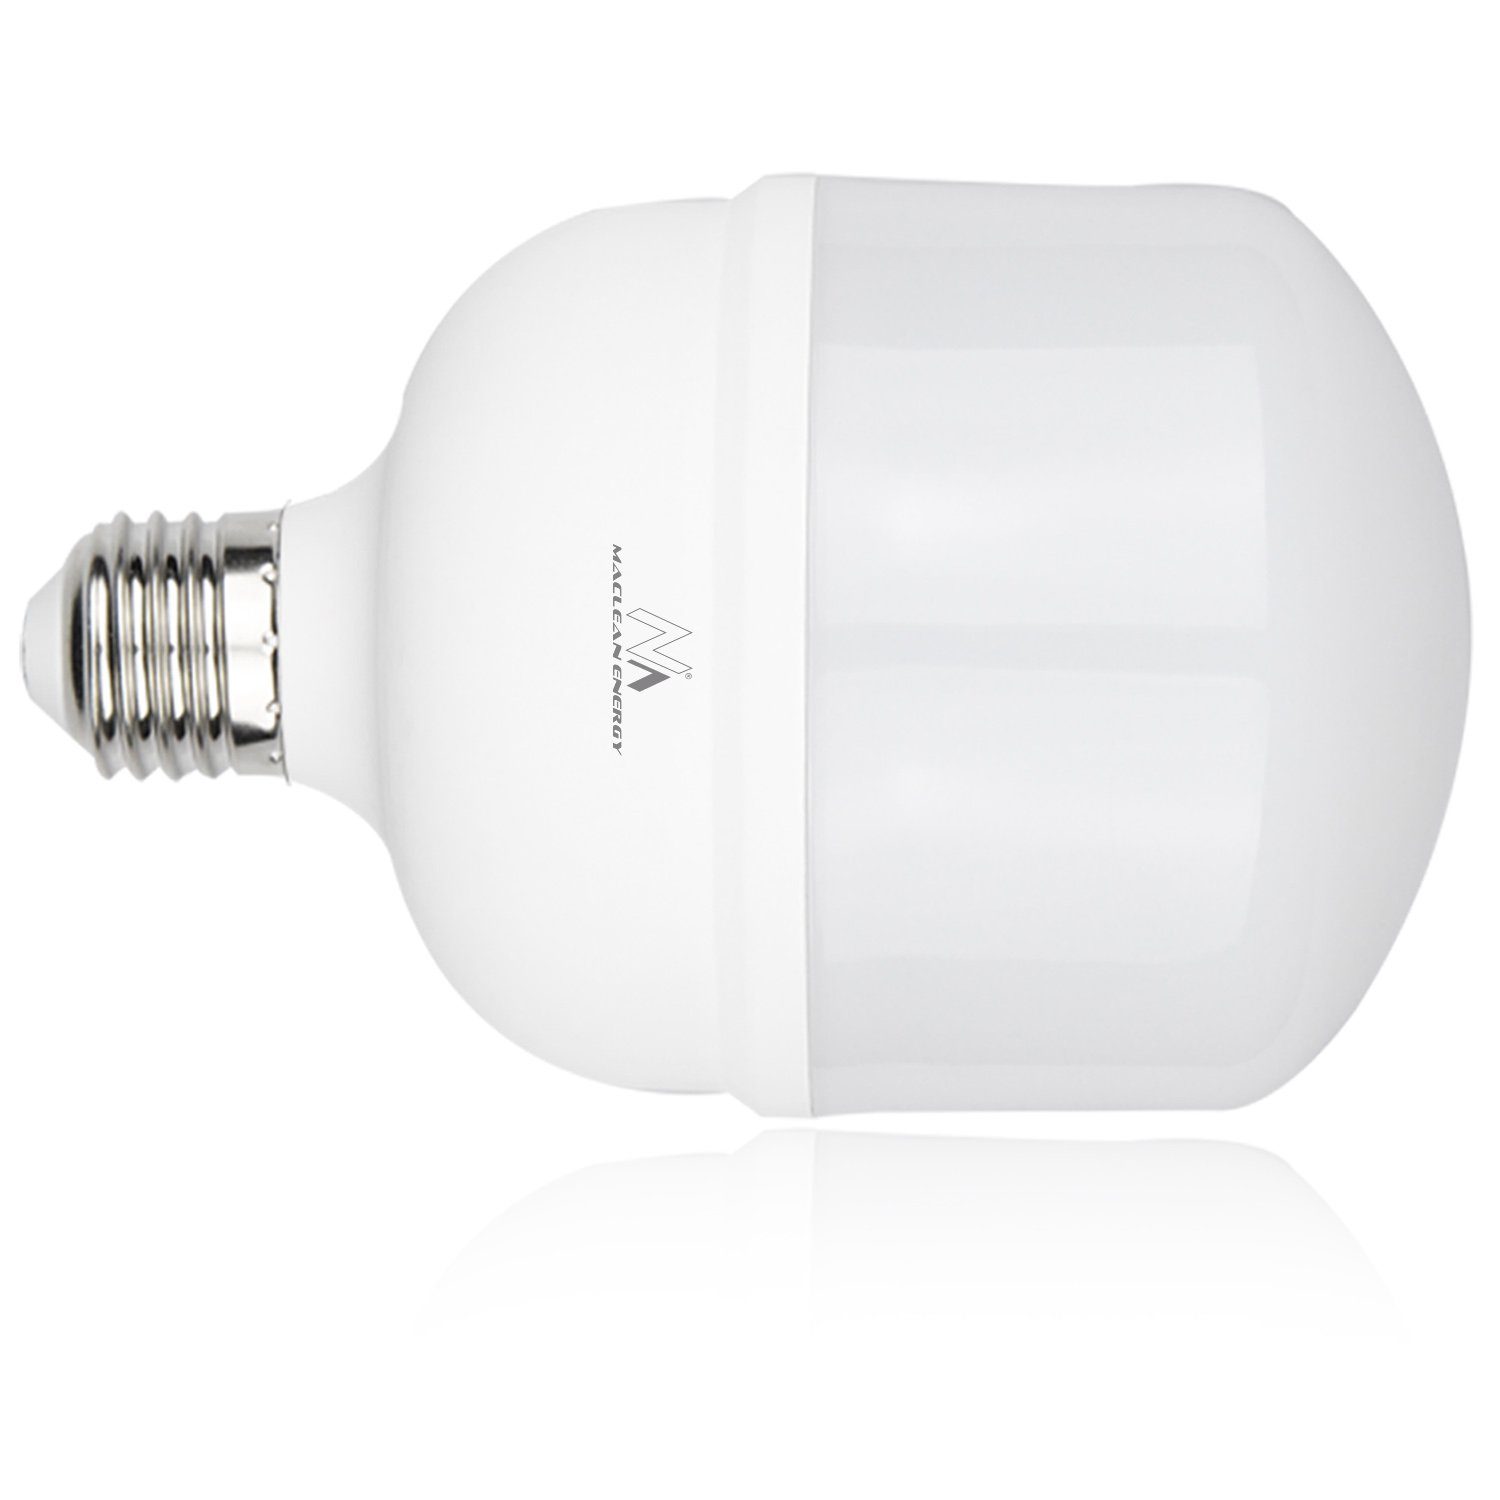 Maclean LED-Leuchtmittel NW, MCE303 / 3990 Lumen E27, Neutralweiß, Neutralweiß, 38W LED-Glühbirne